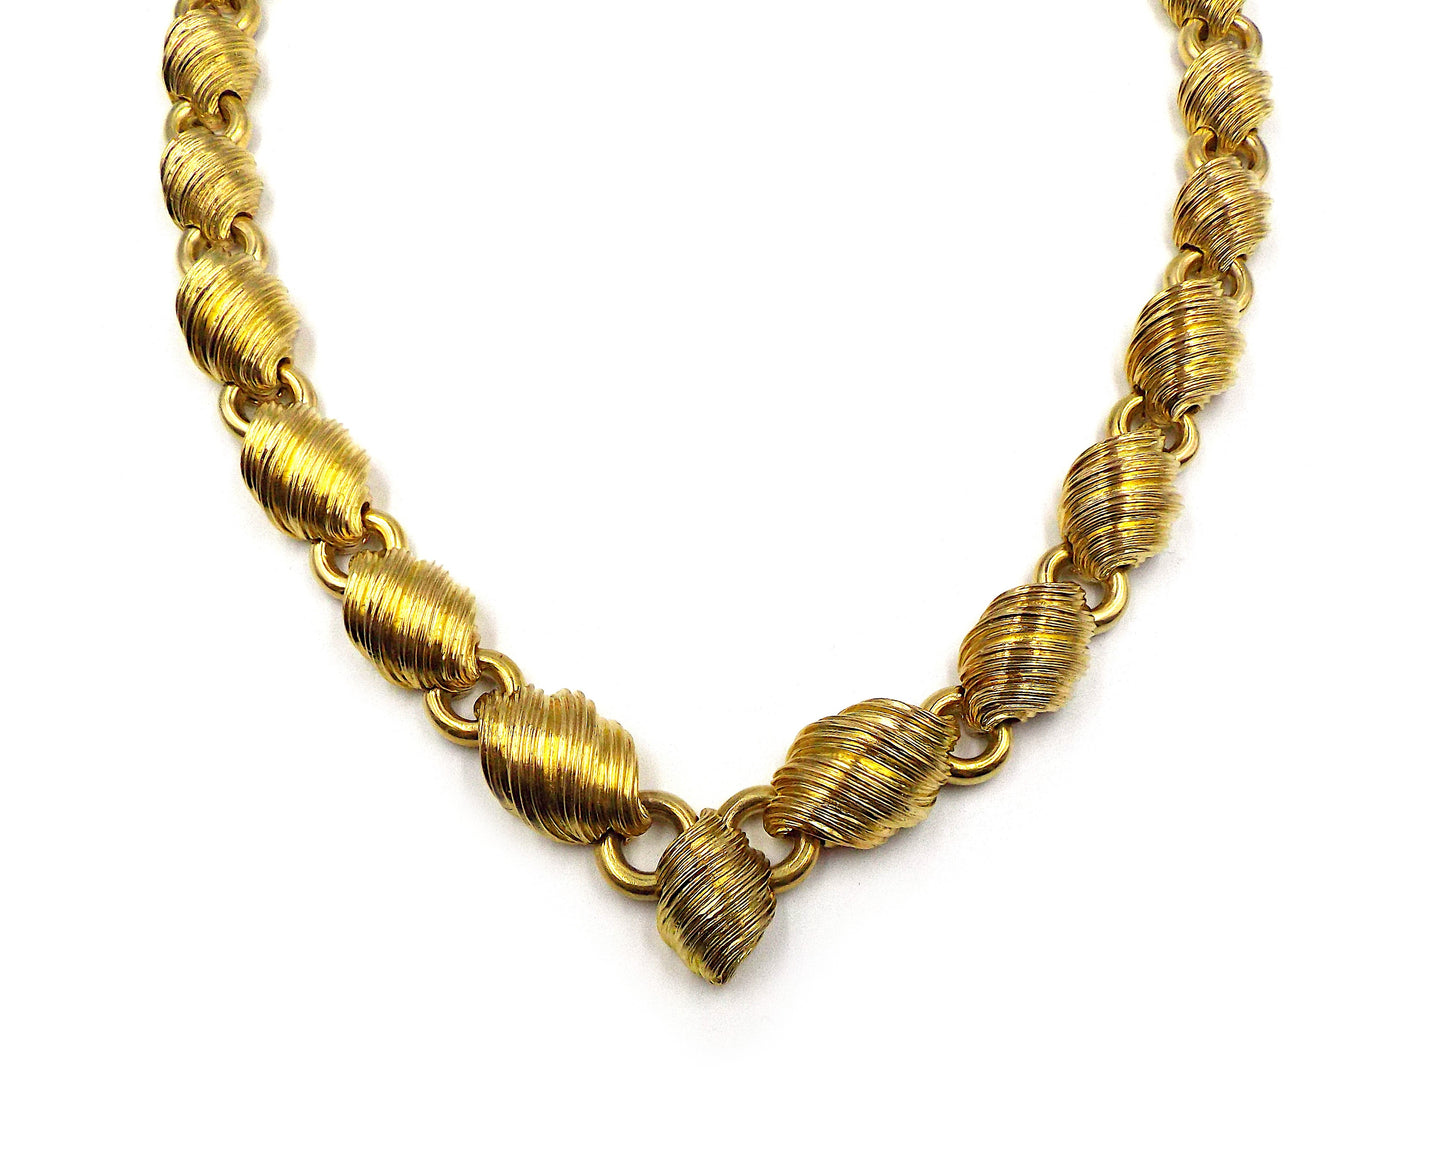 David Webb 18K Yellow Gold Textured Link Necklace